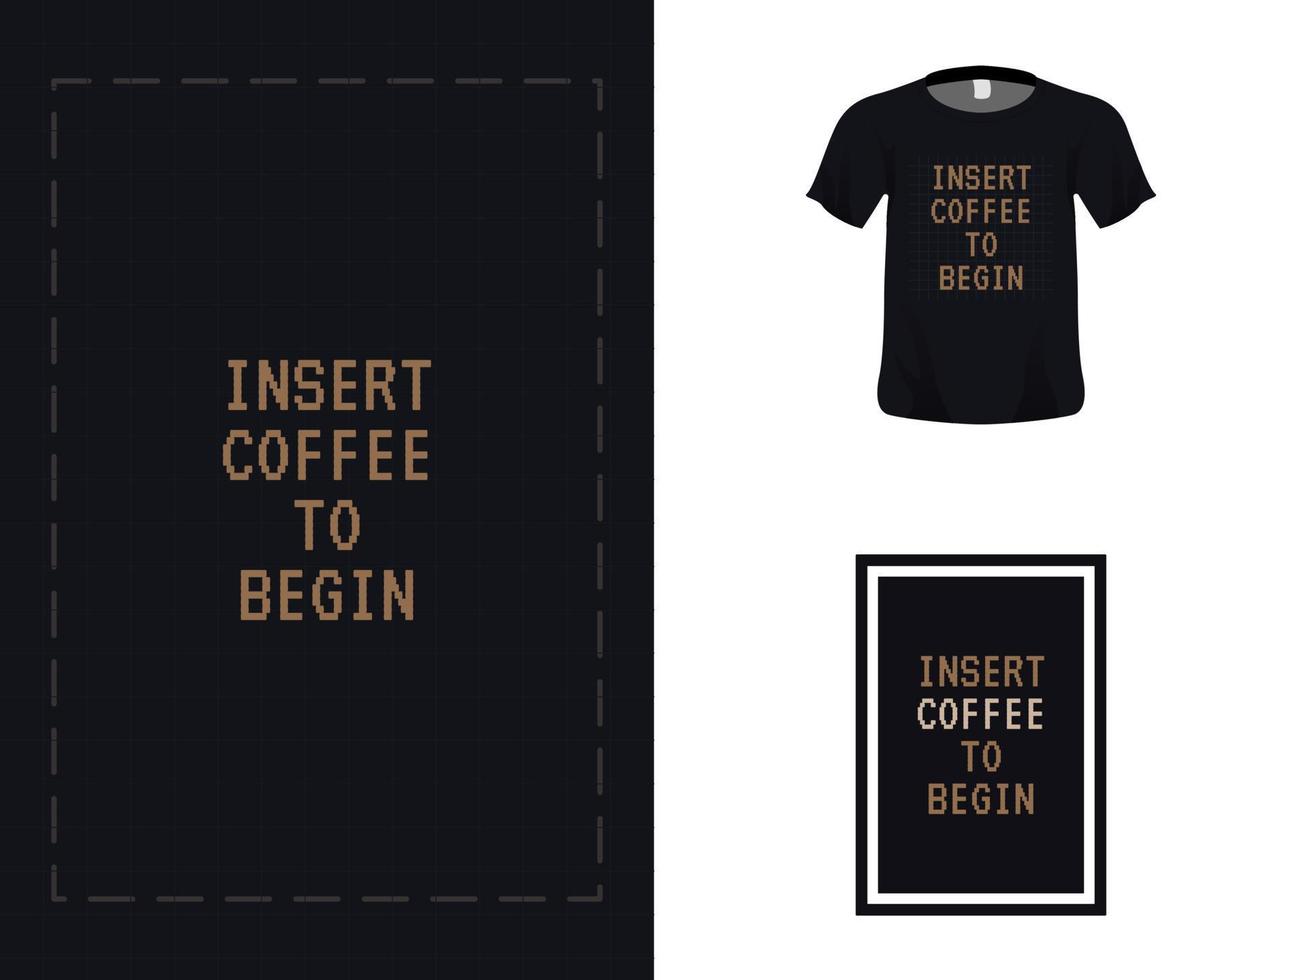 diseño de cita de tipografía de camiseta, inserte café para comenzar a imprimir. plantilla de póster, vector premium.